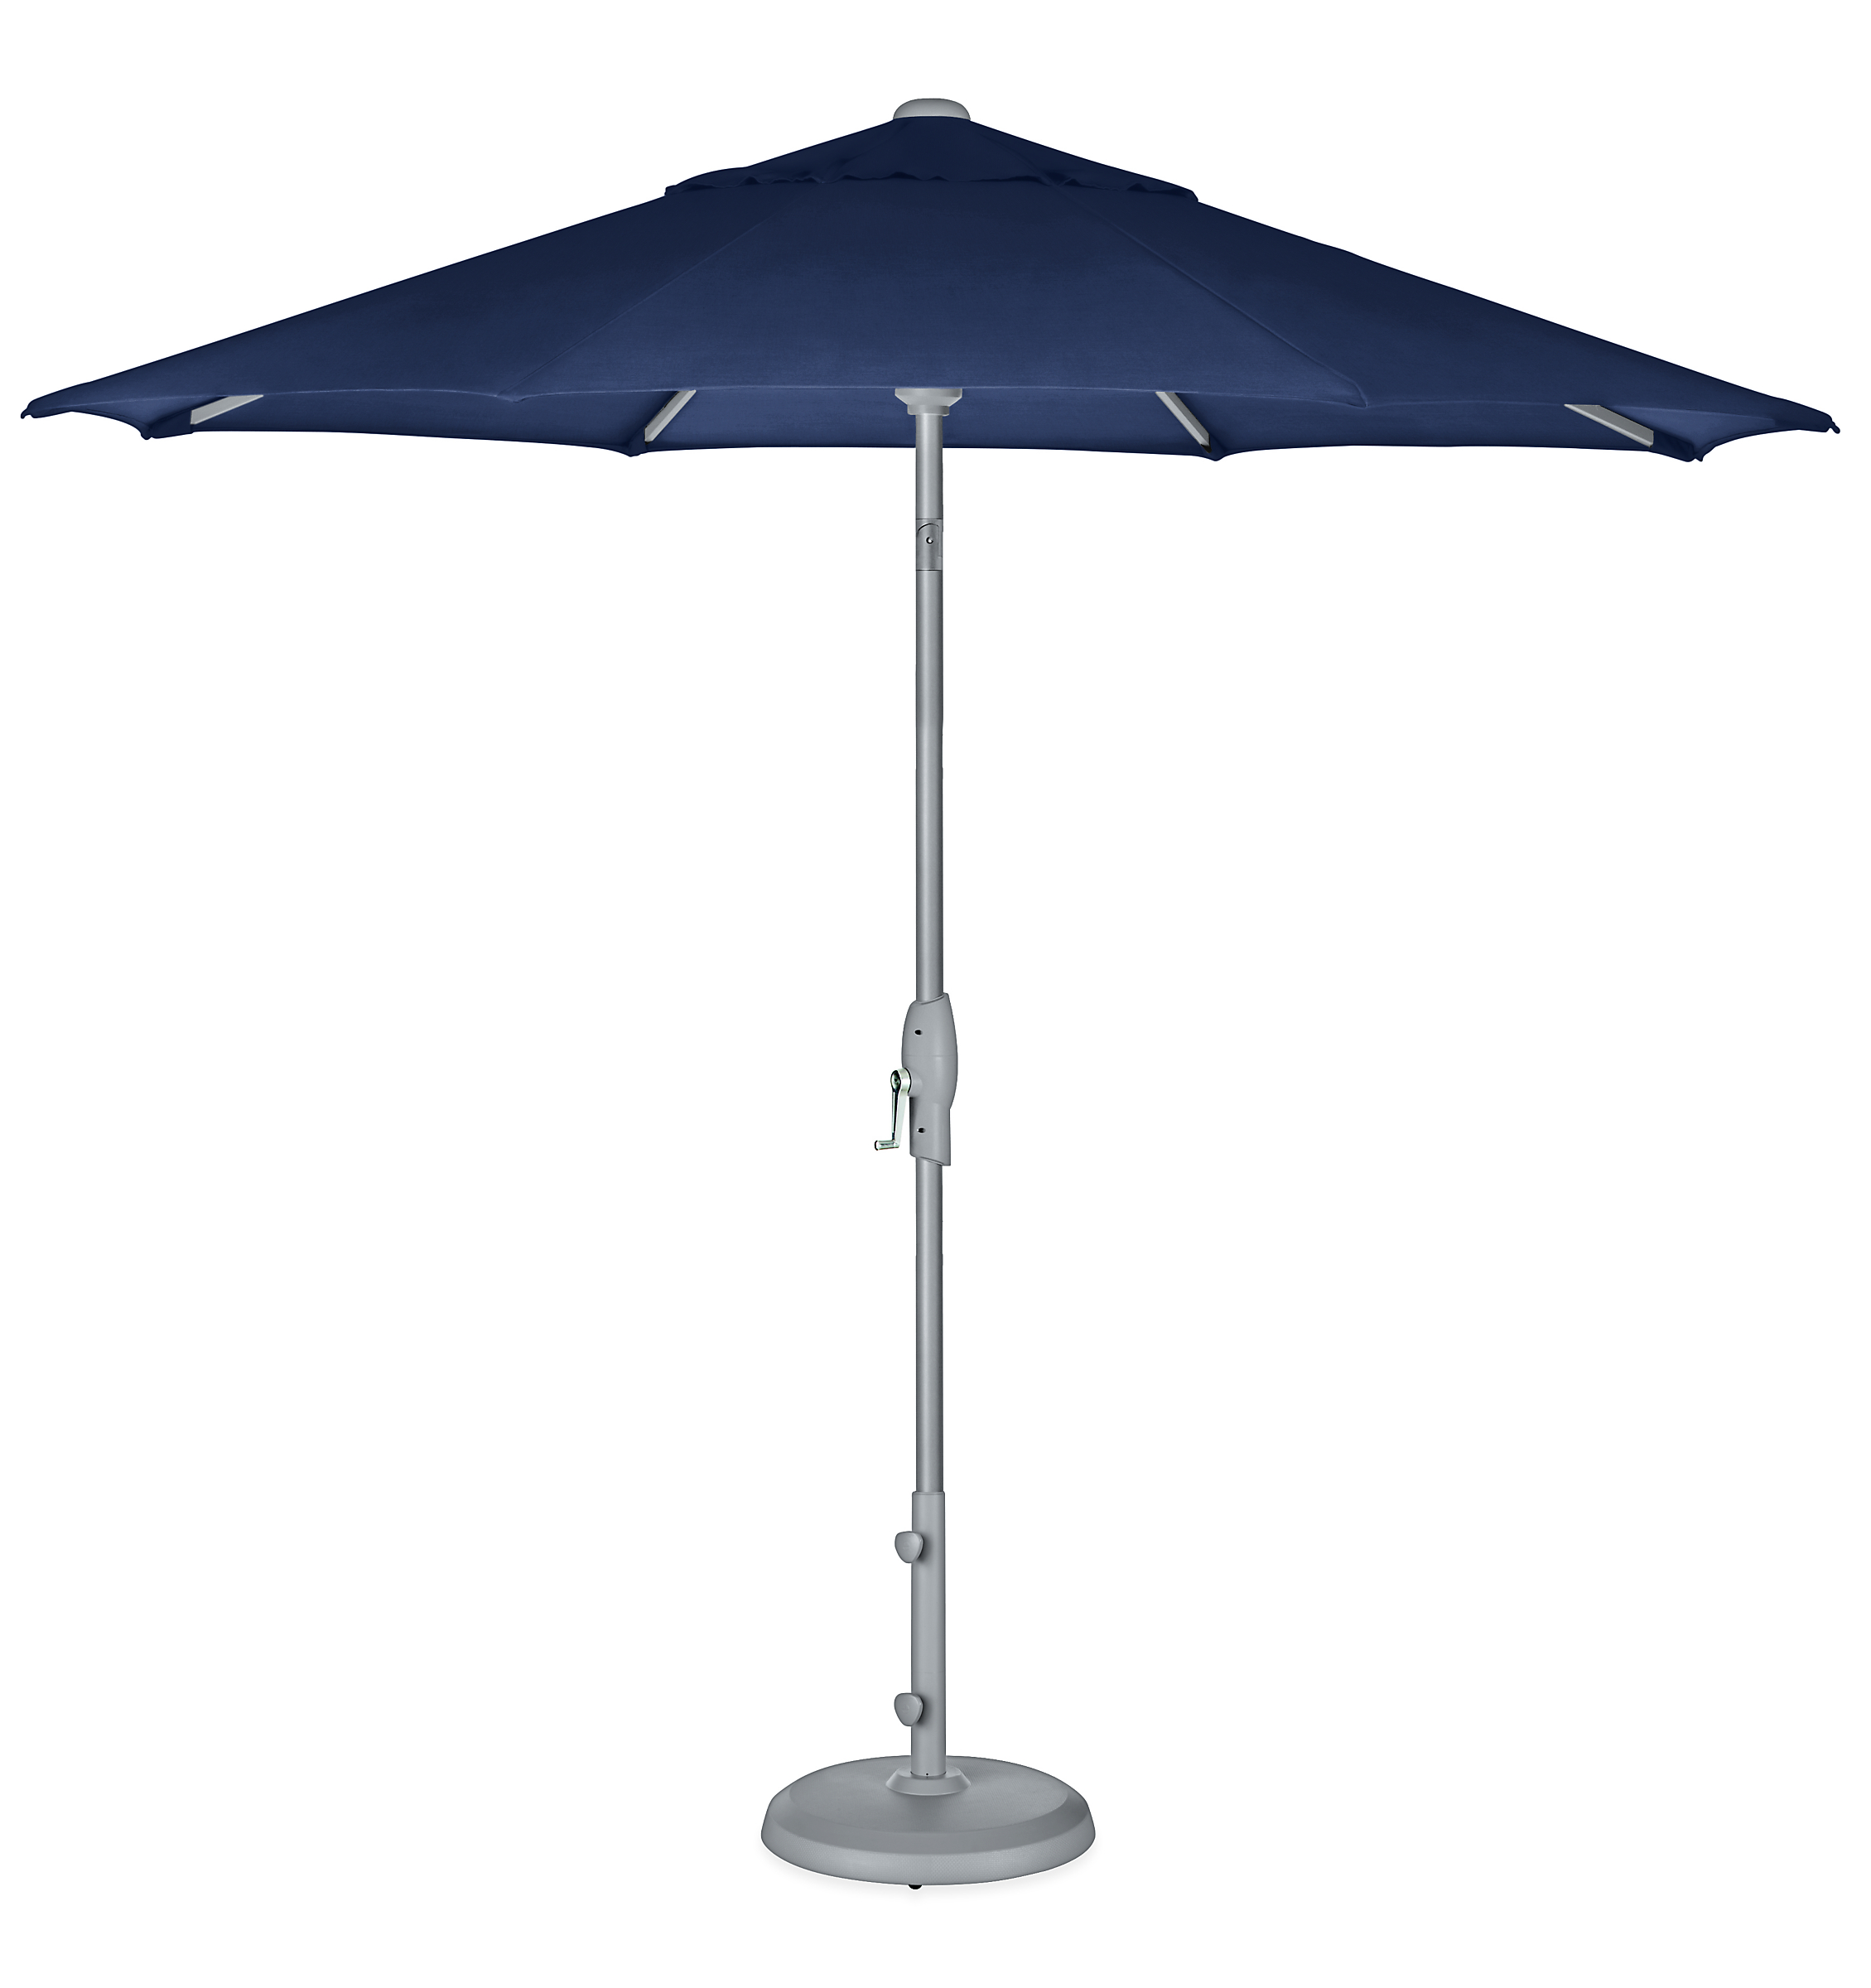 Oahu 9' Round Patio Umbrella in Sunbrella Canvas Navy with Silver Base